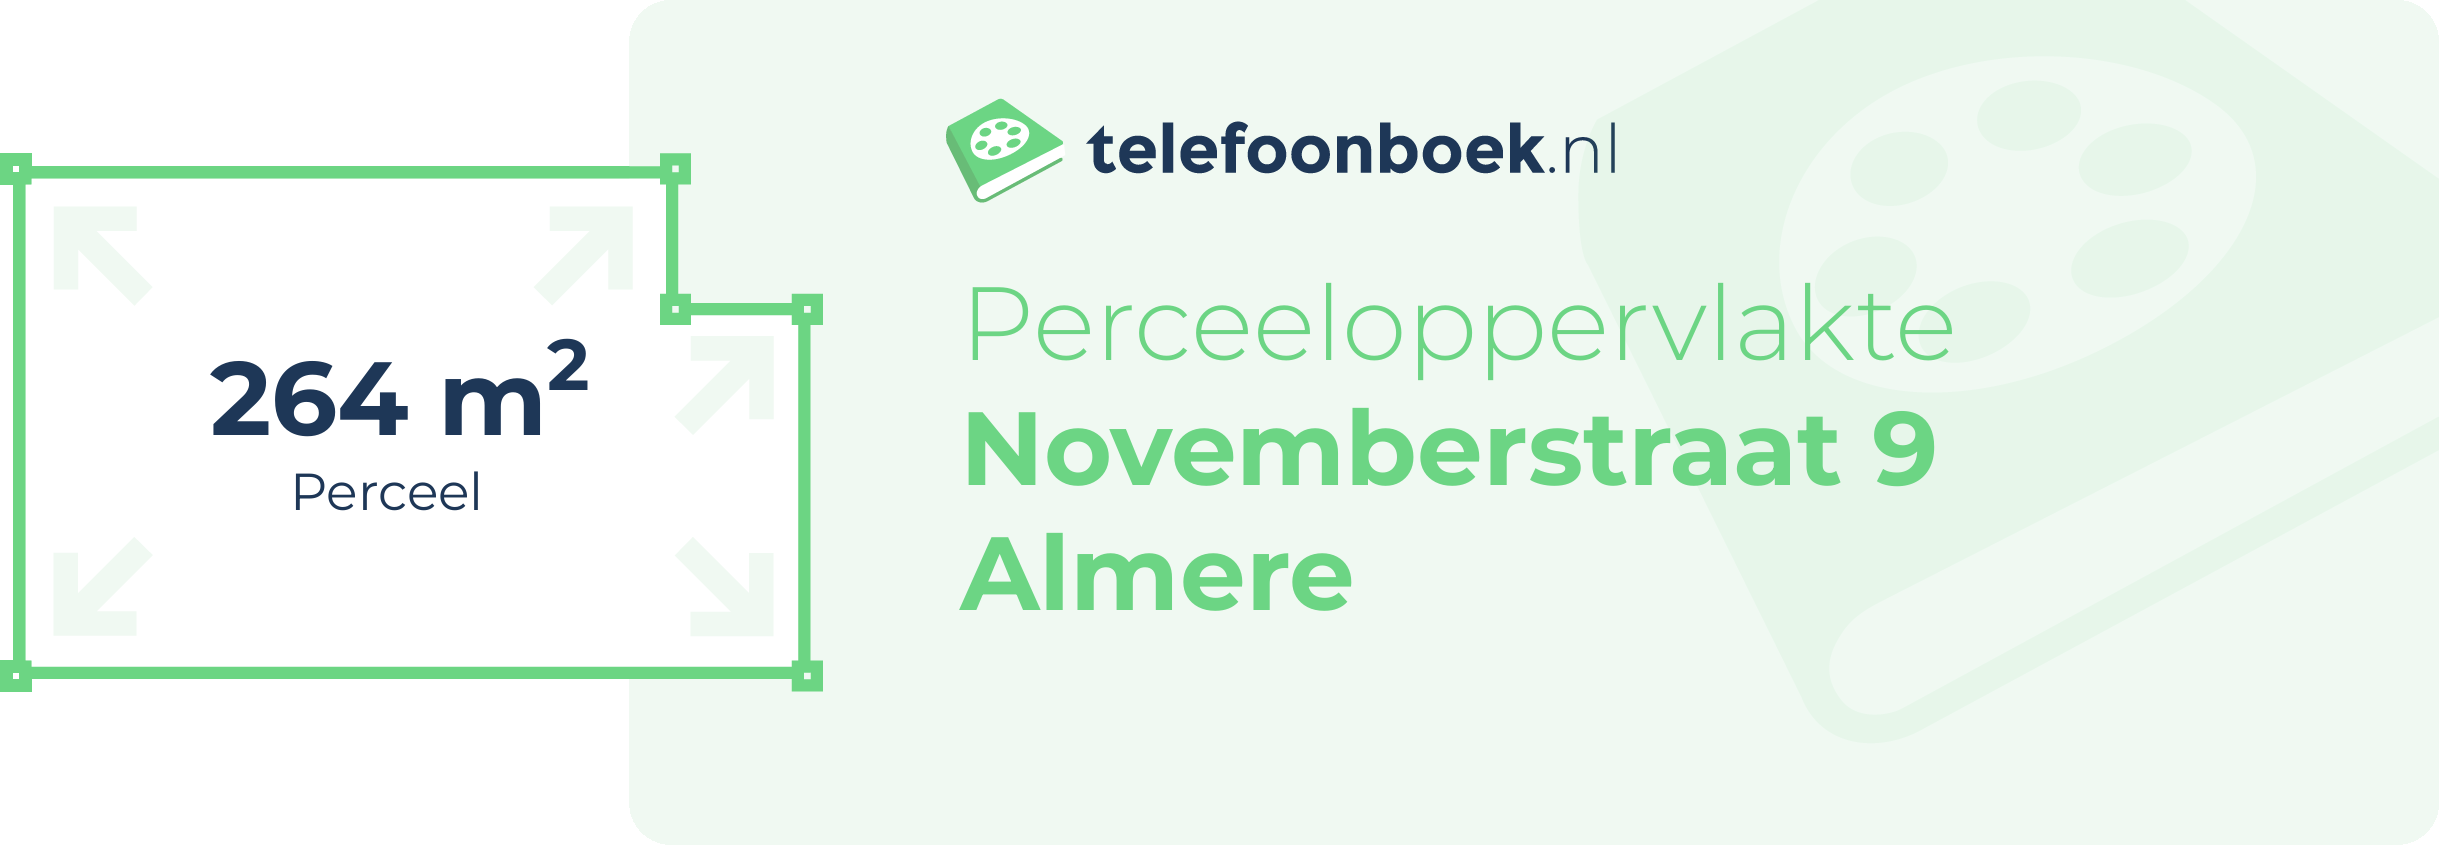 Perceeloppervlakte Novemberstraat 9 Almere